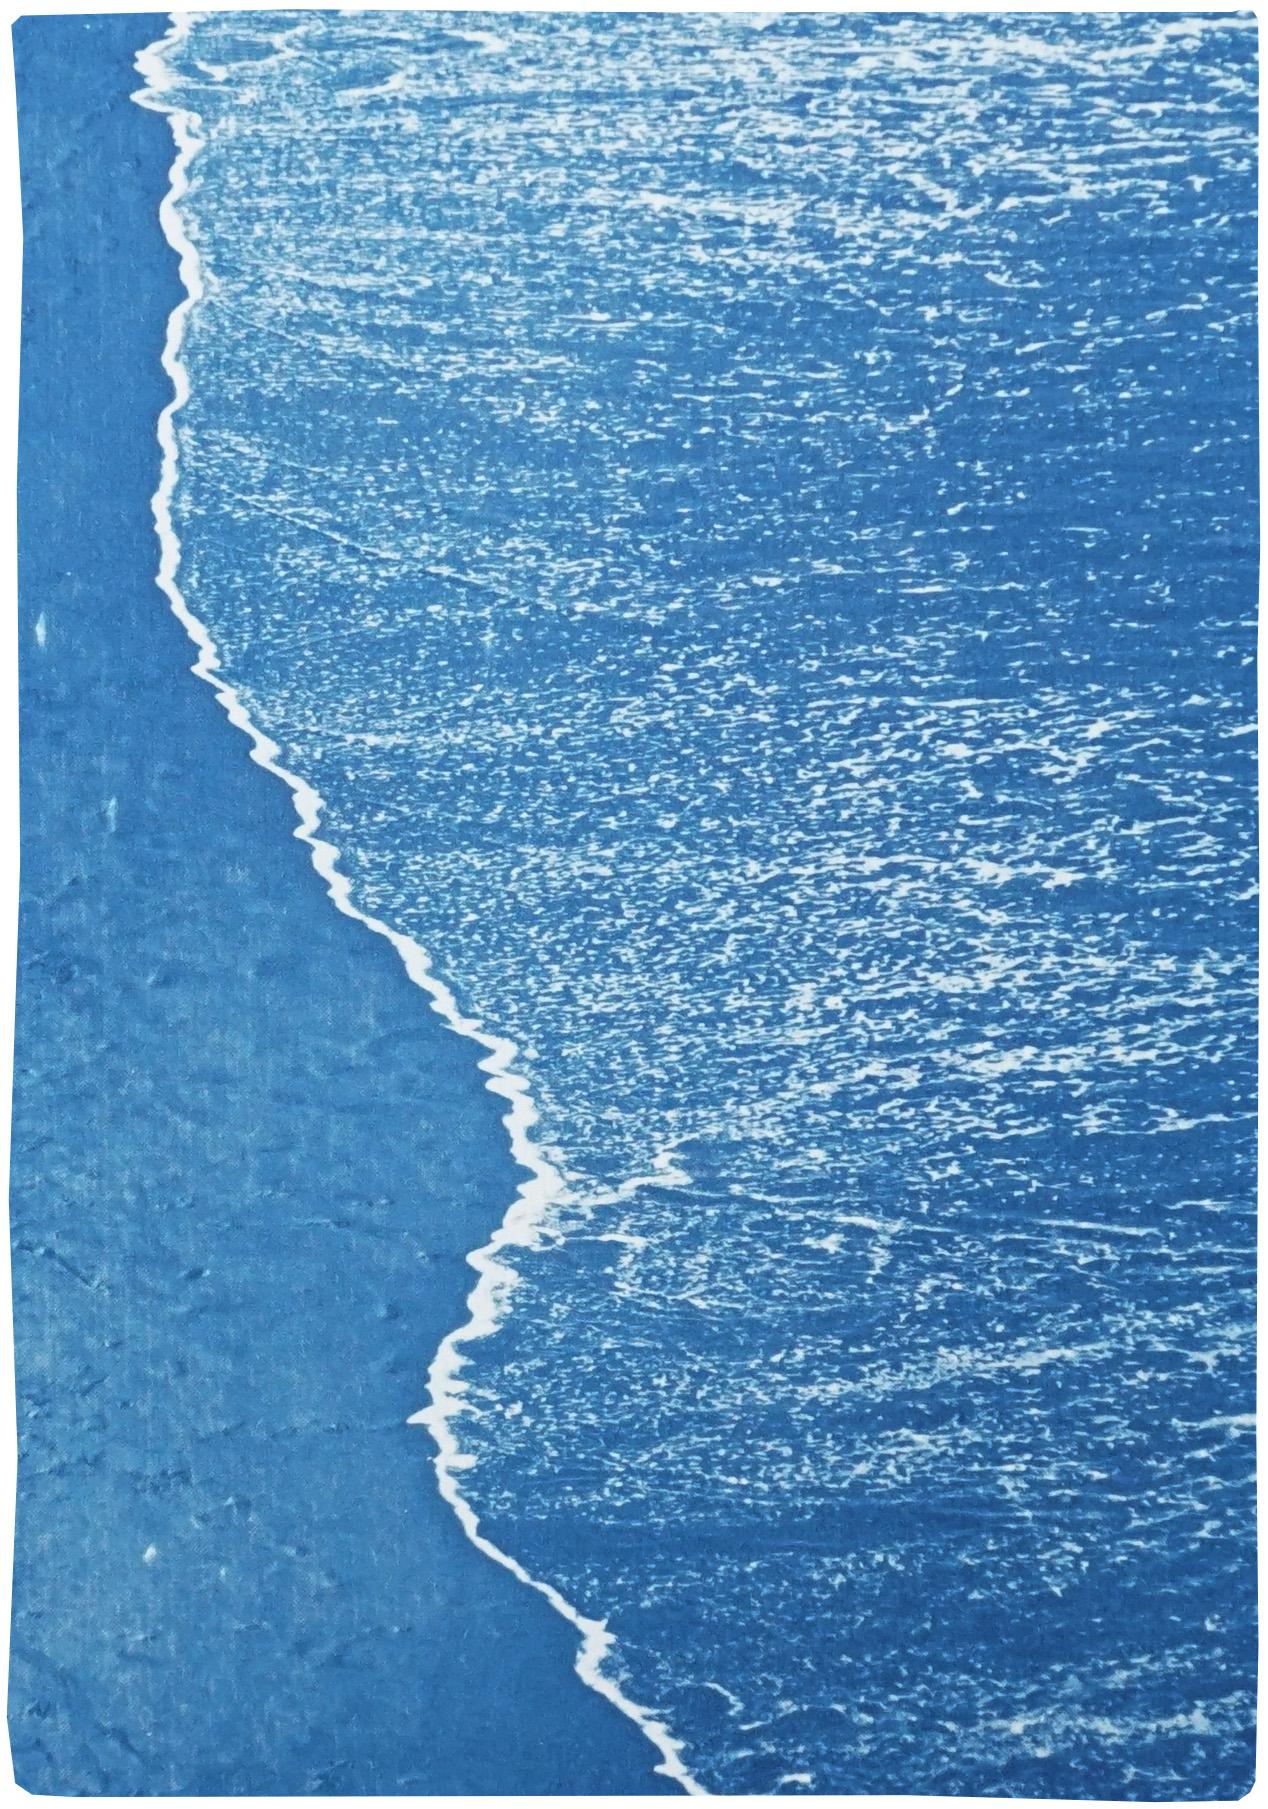 Blue Subtle Seascape of Calm Costa Rica Shore, Minimal Triptych Cyanotype  1